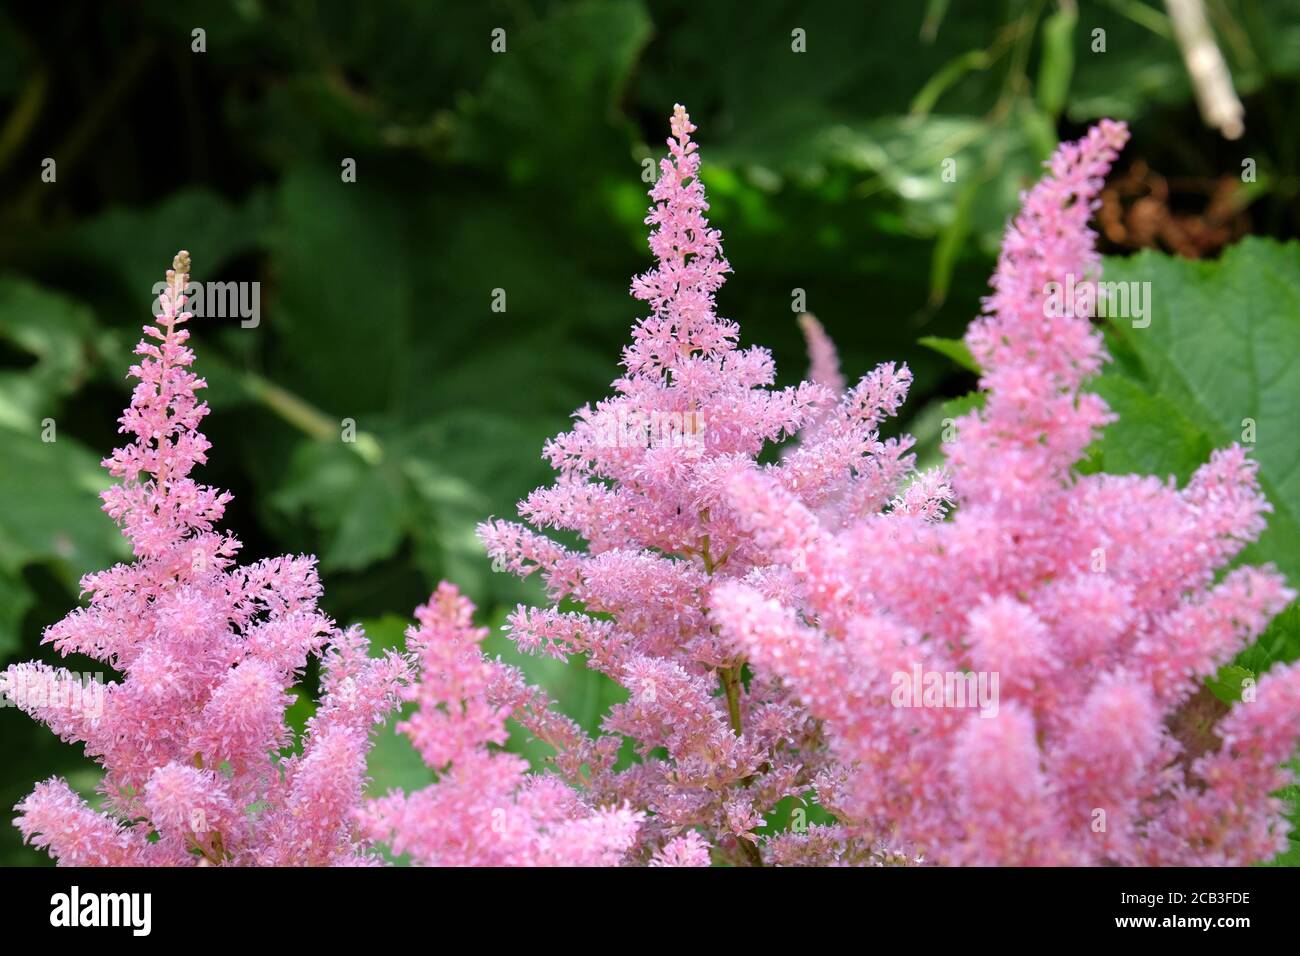 Pink astilbe 'false buck's beard' in flower during the summer months Stock Photo